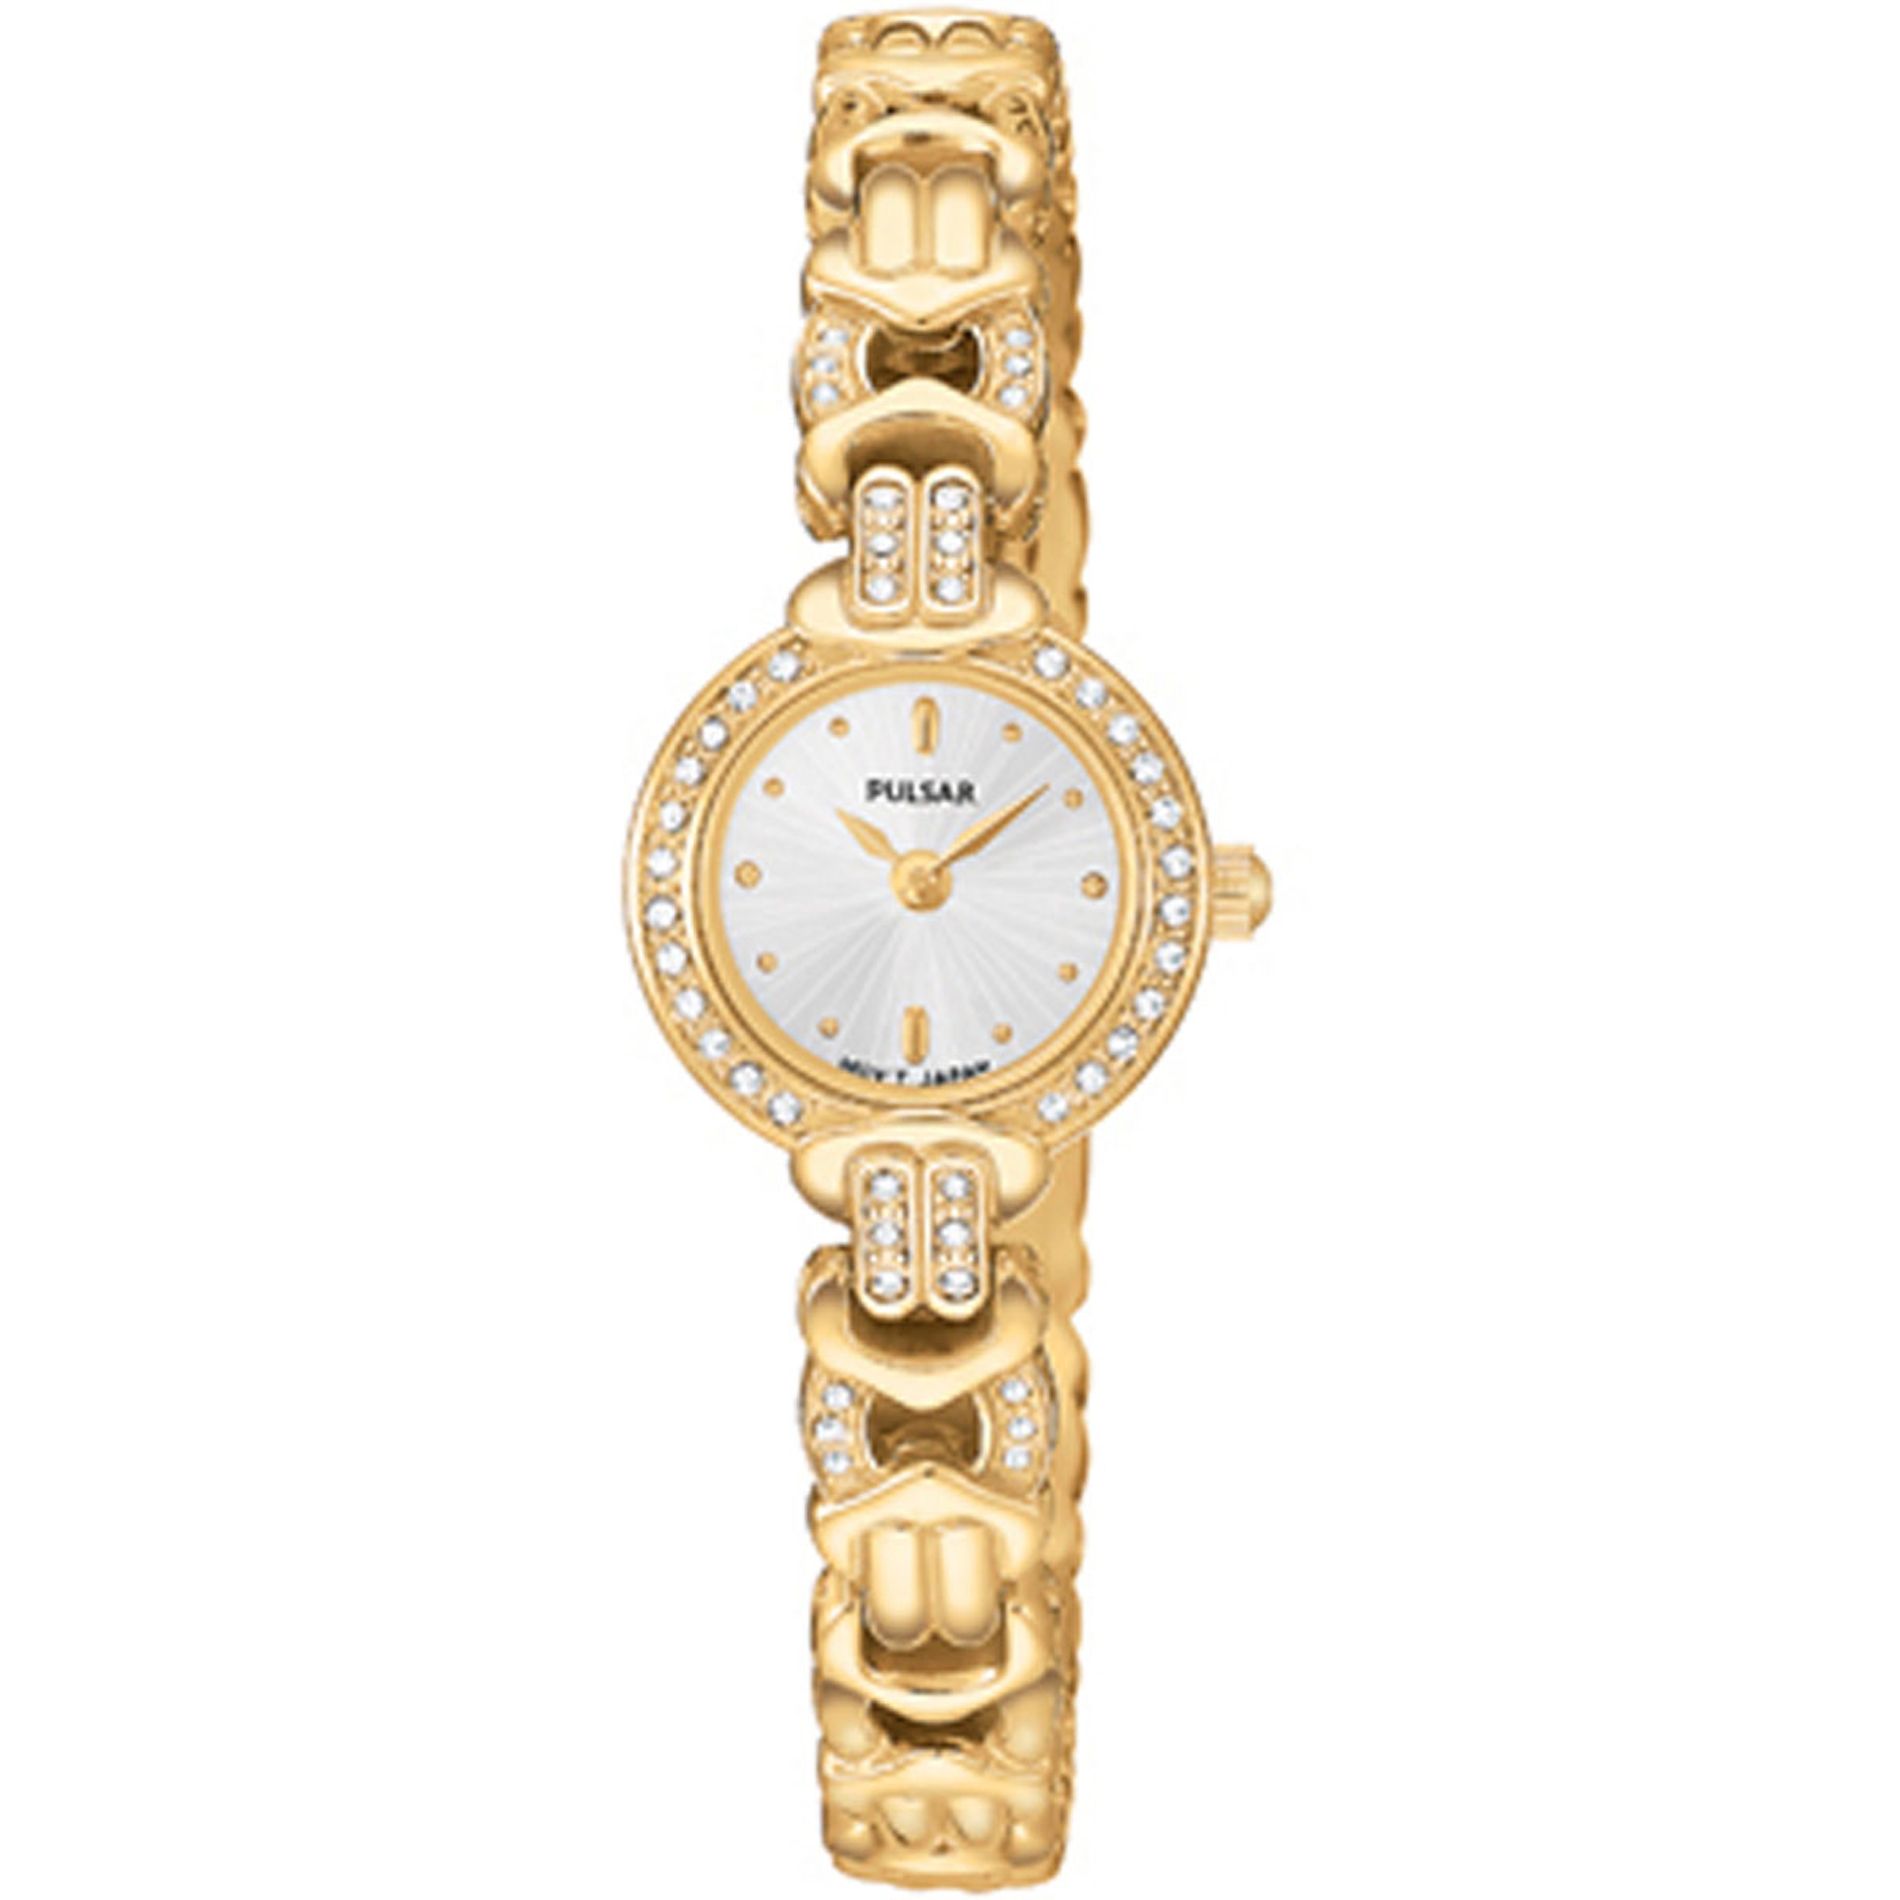 Pulsar Ladies' Crystal Goldtone Dress Watch